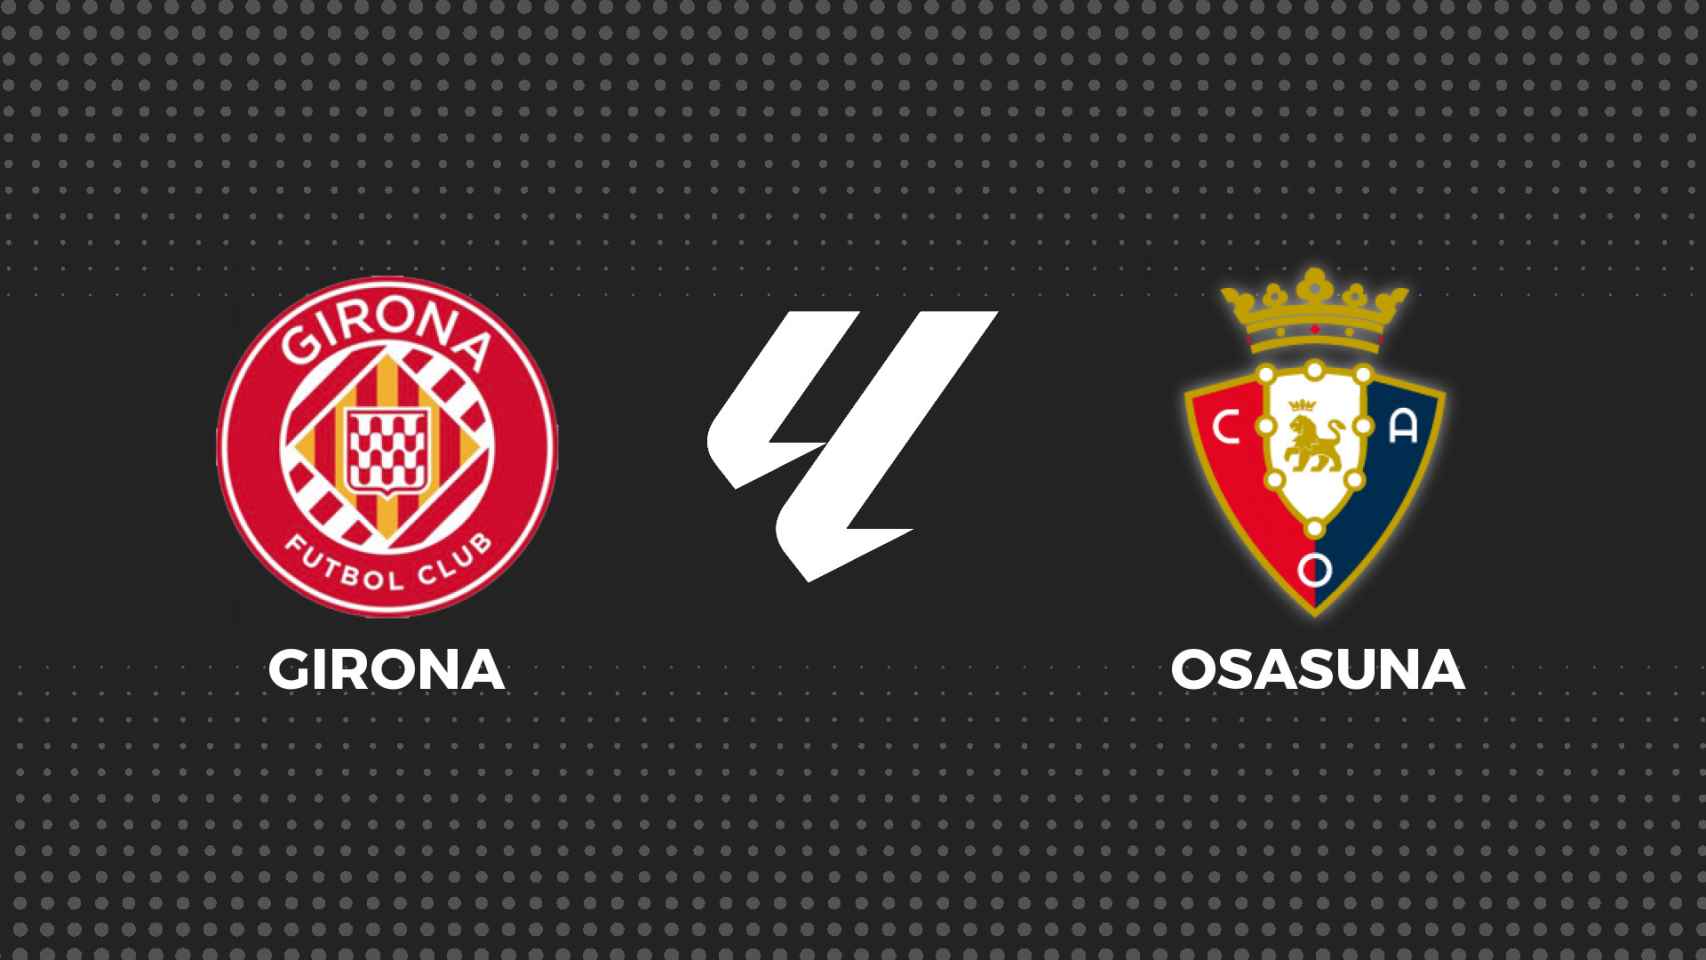 Girona - Osasuna, La Liga en directo